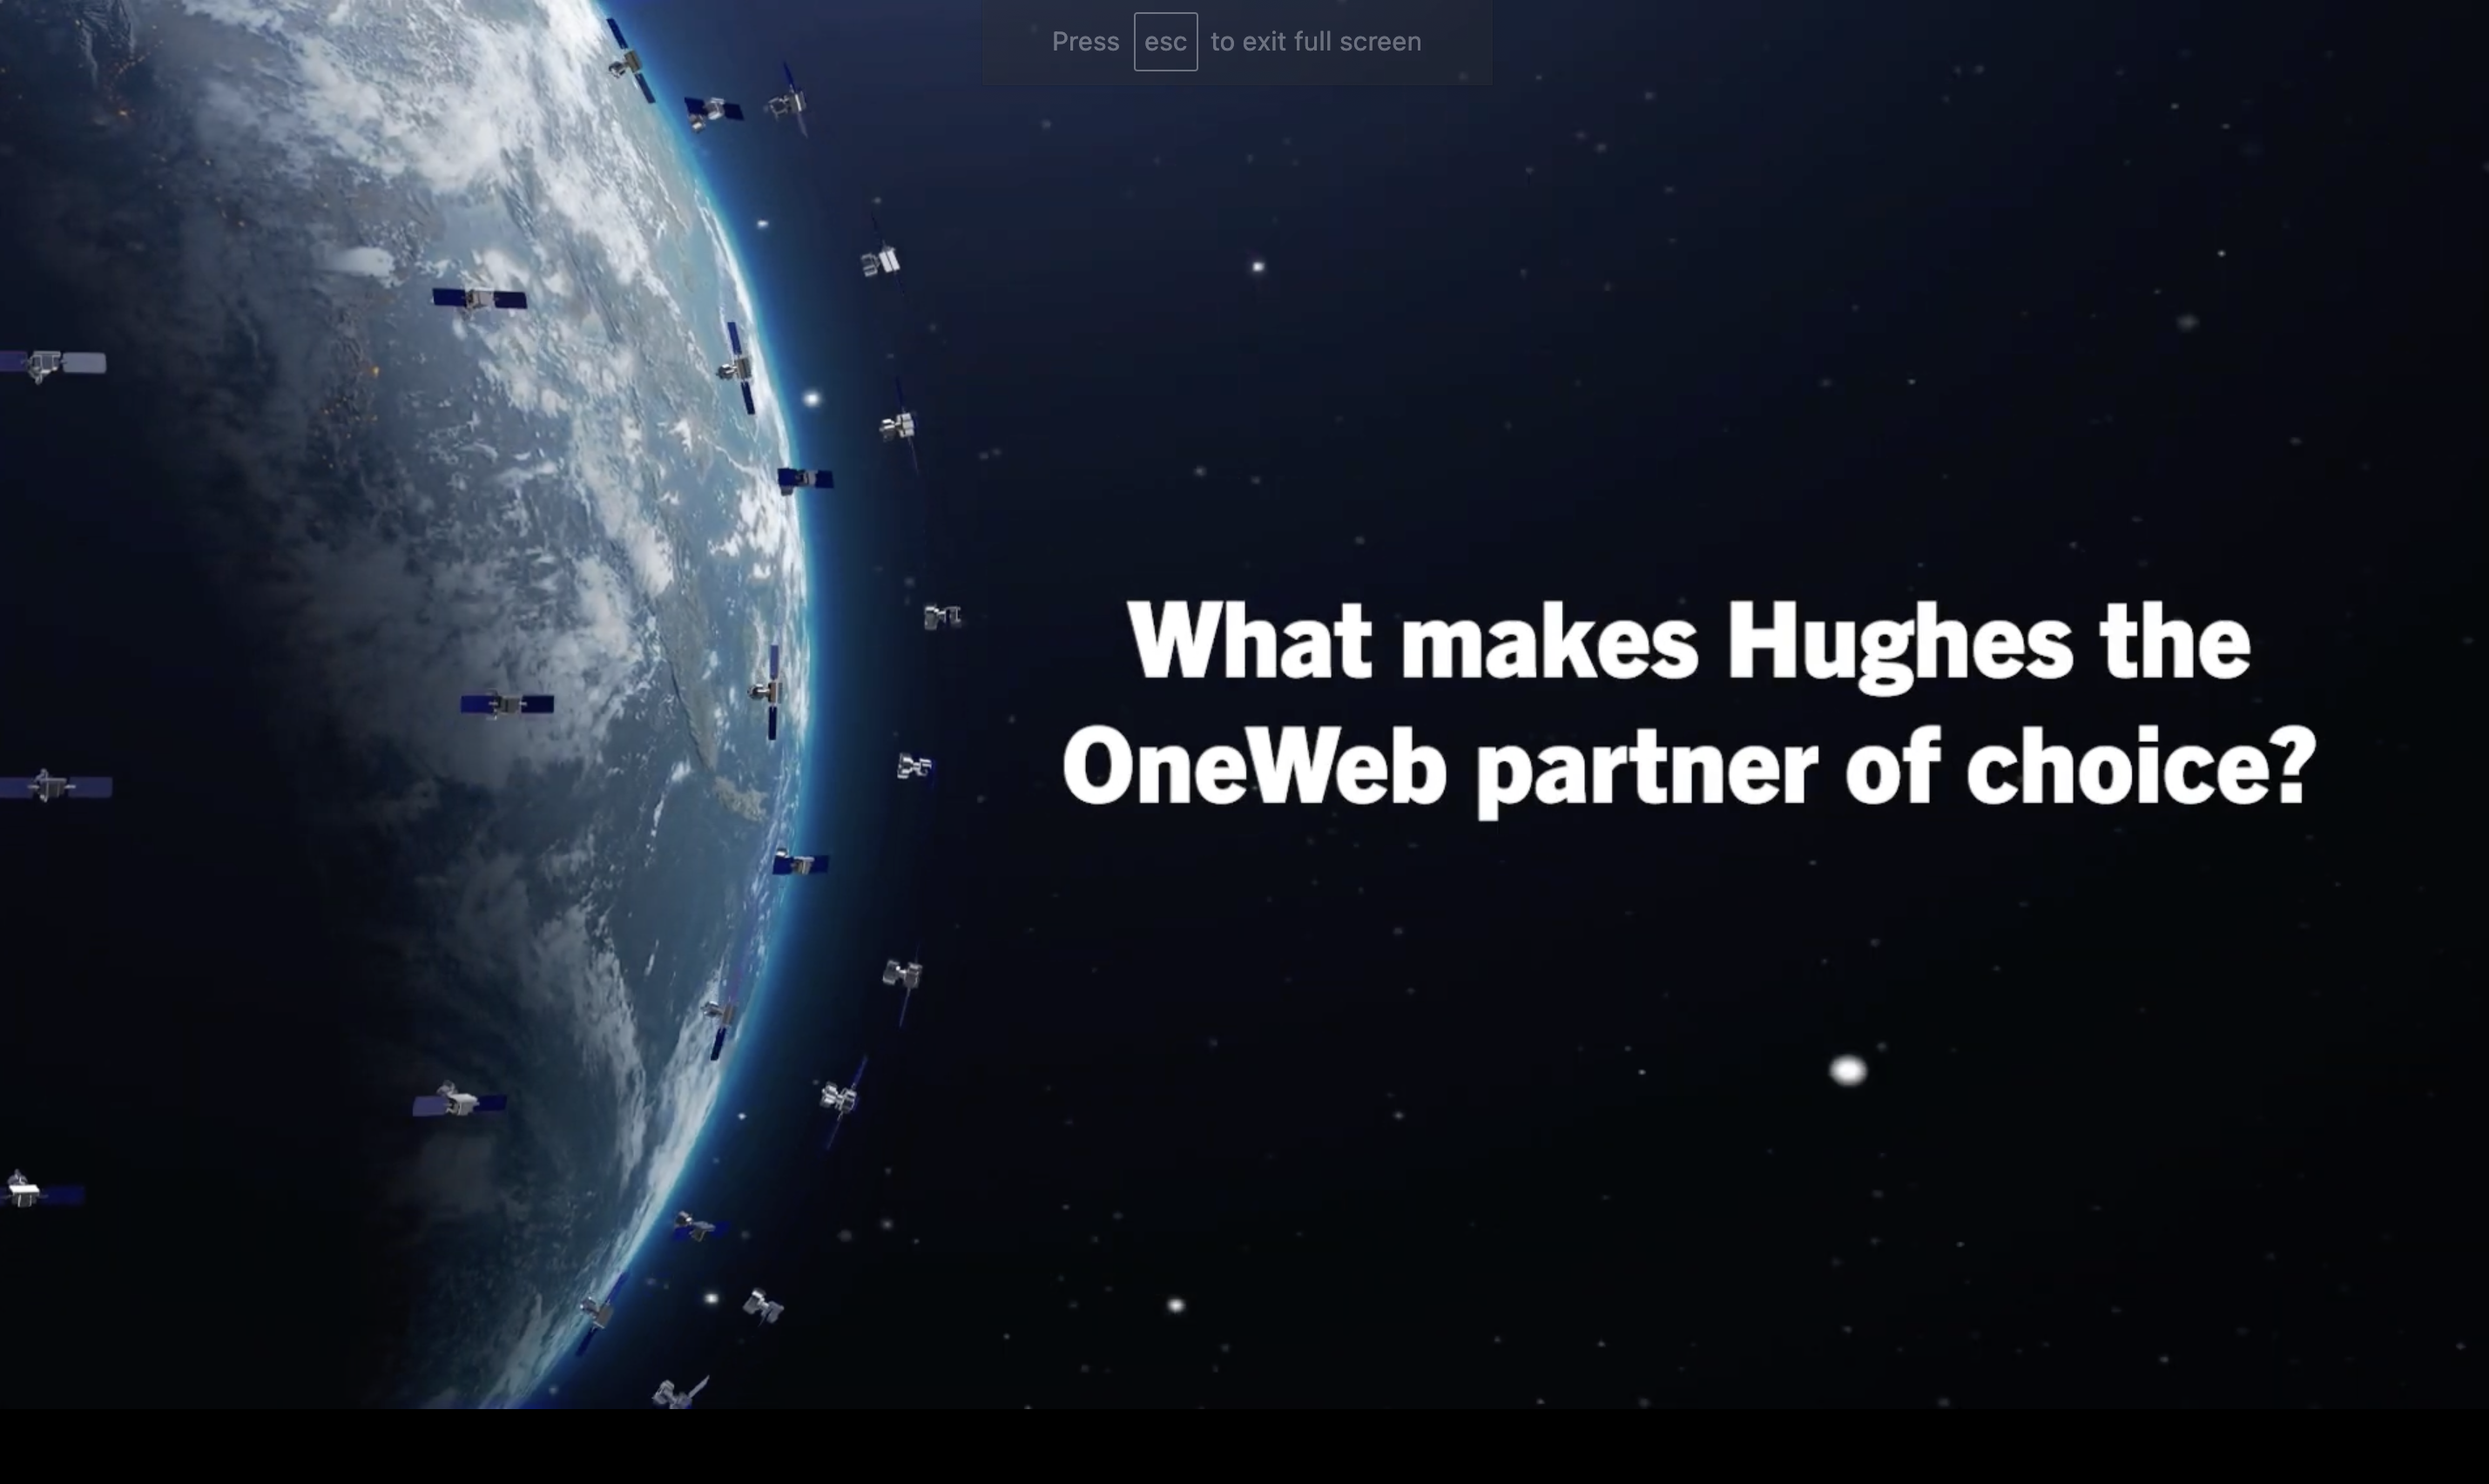 Hughes, the OneWeb Partner of Choice